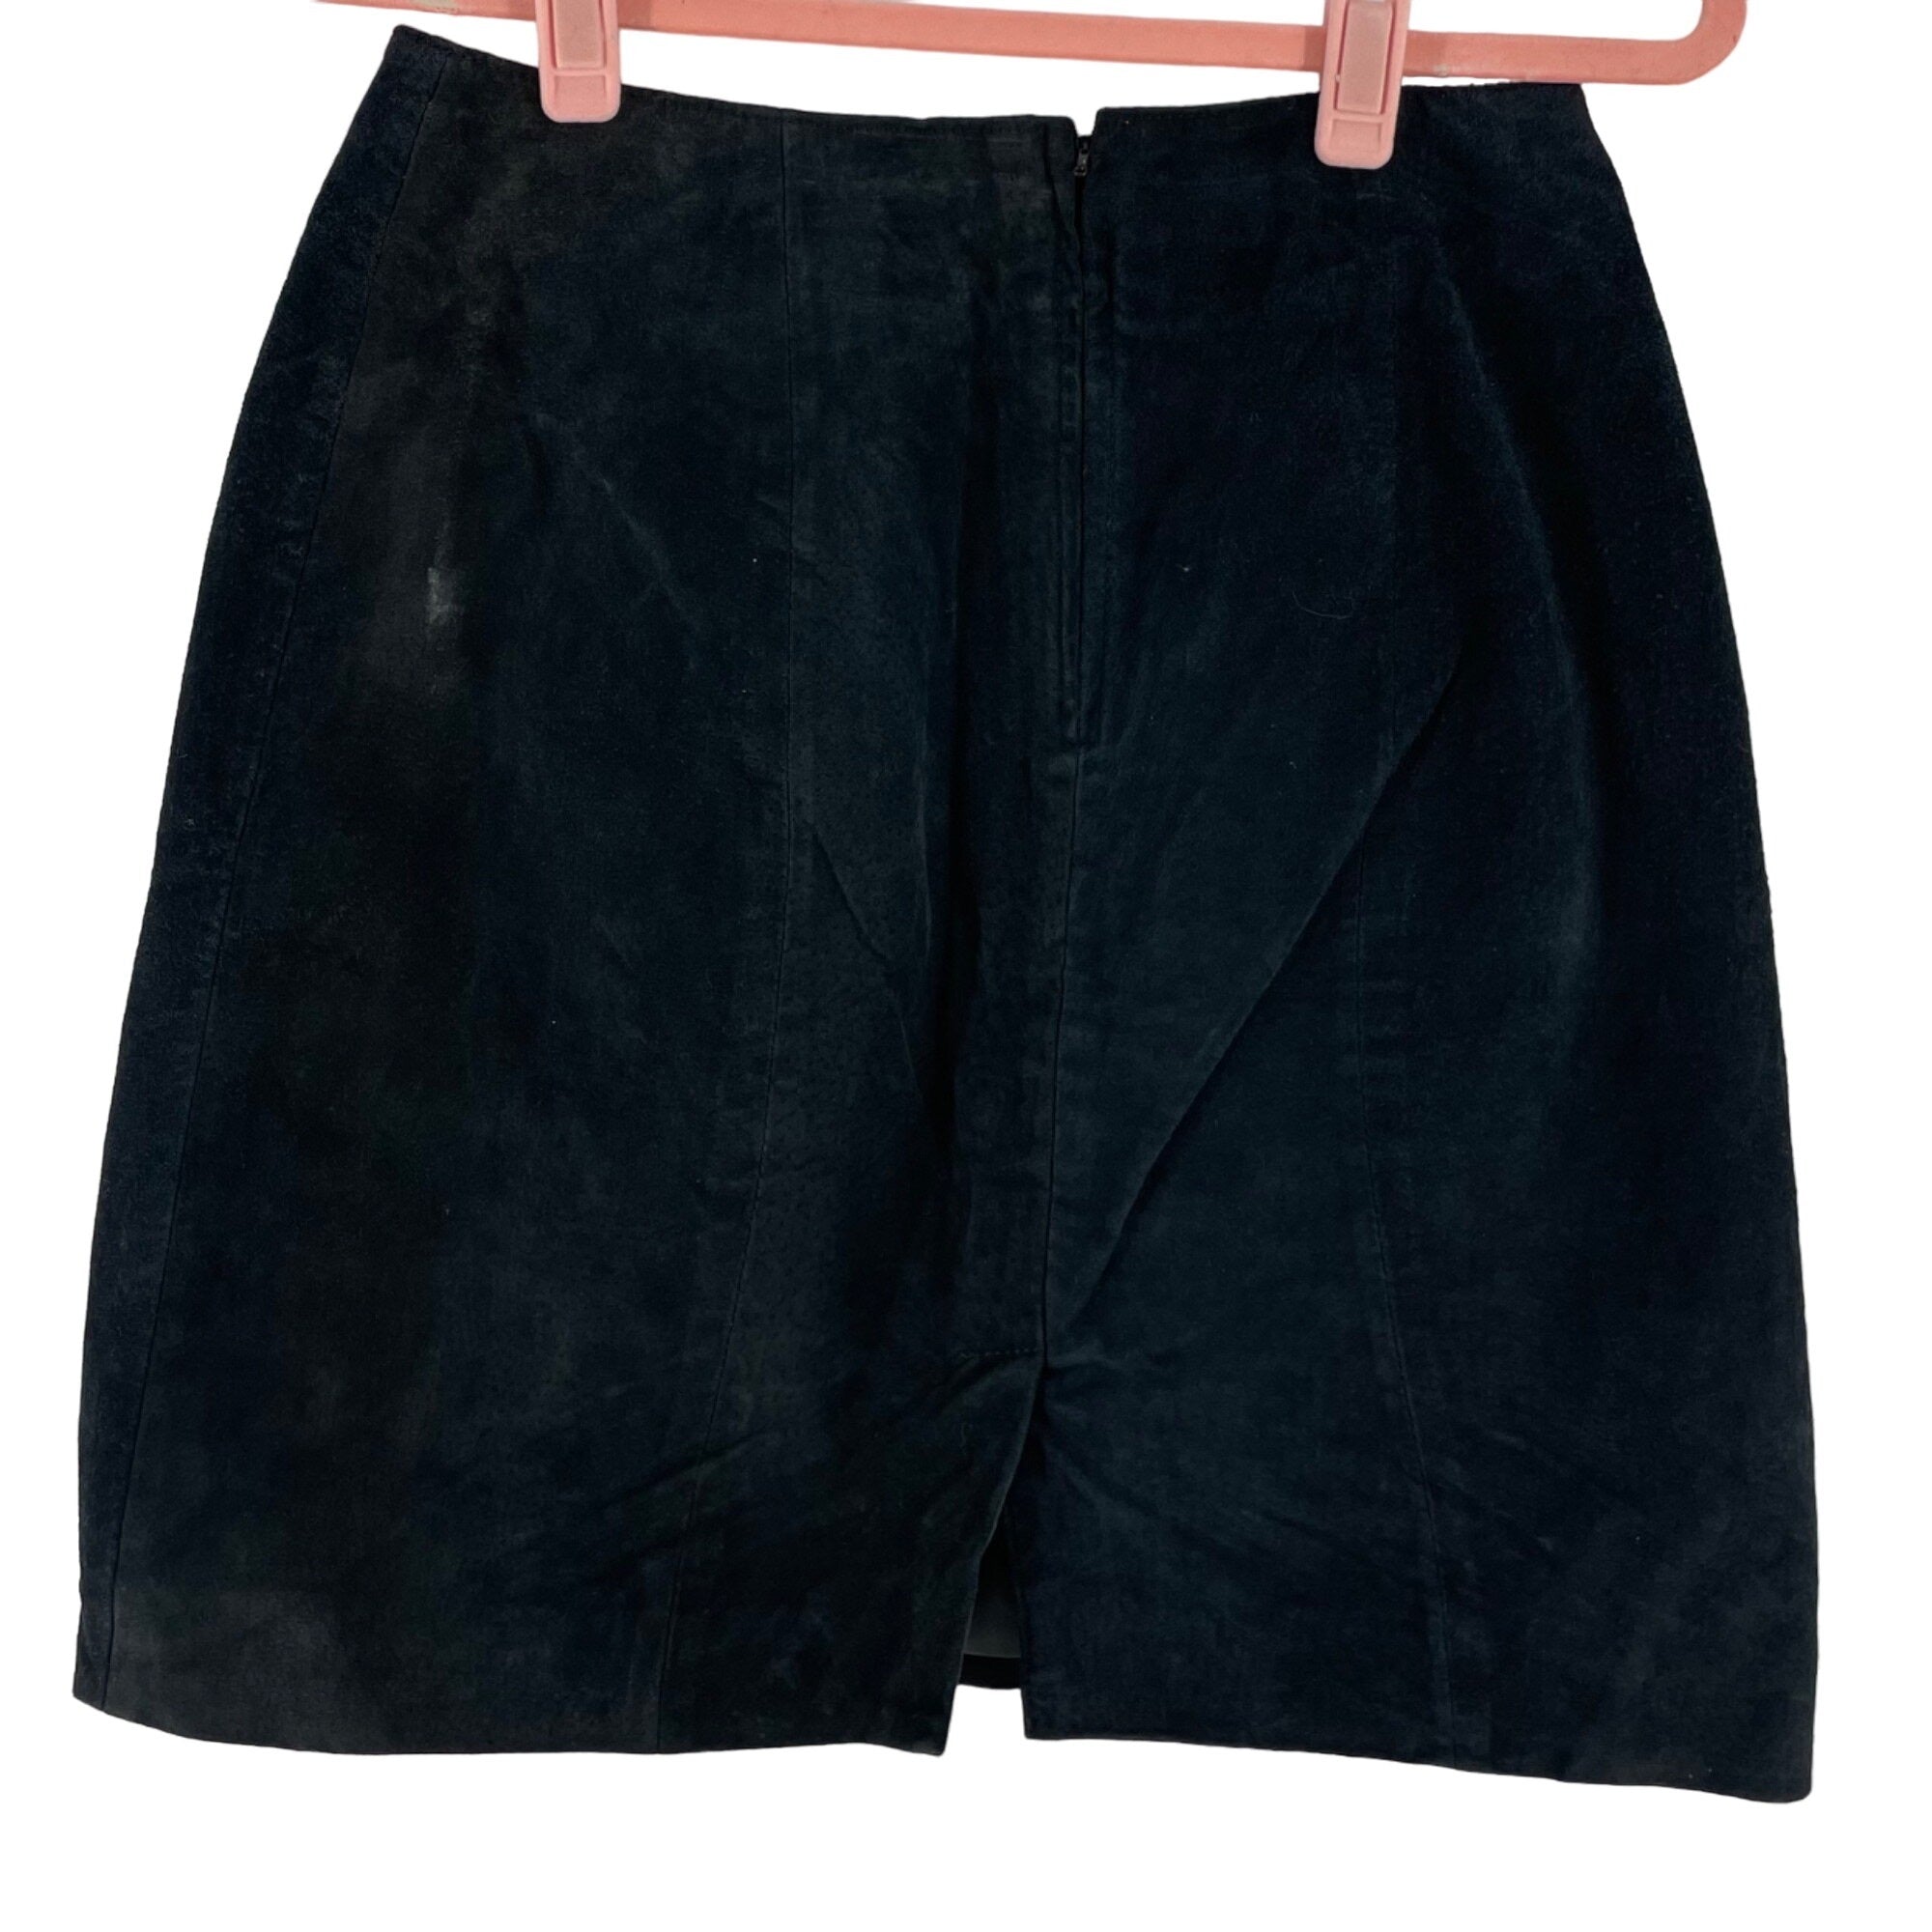 Vintage Savannah Women’s 6P Black Leather Mini Skirt